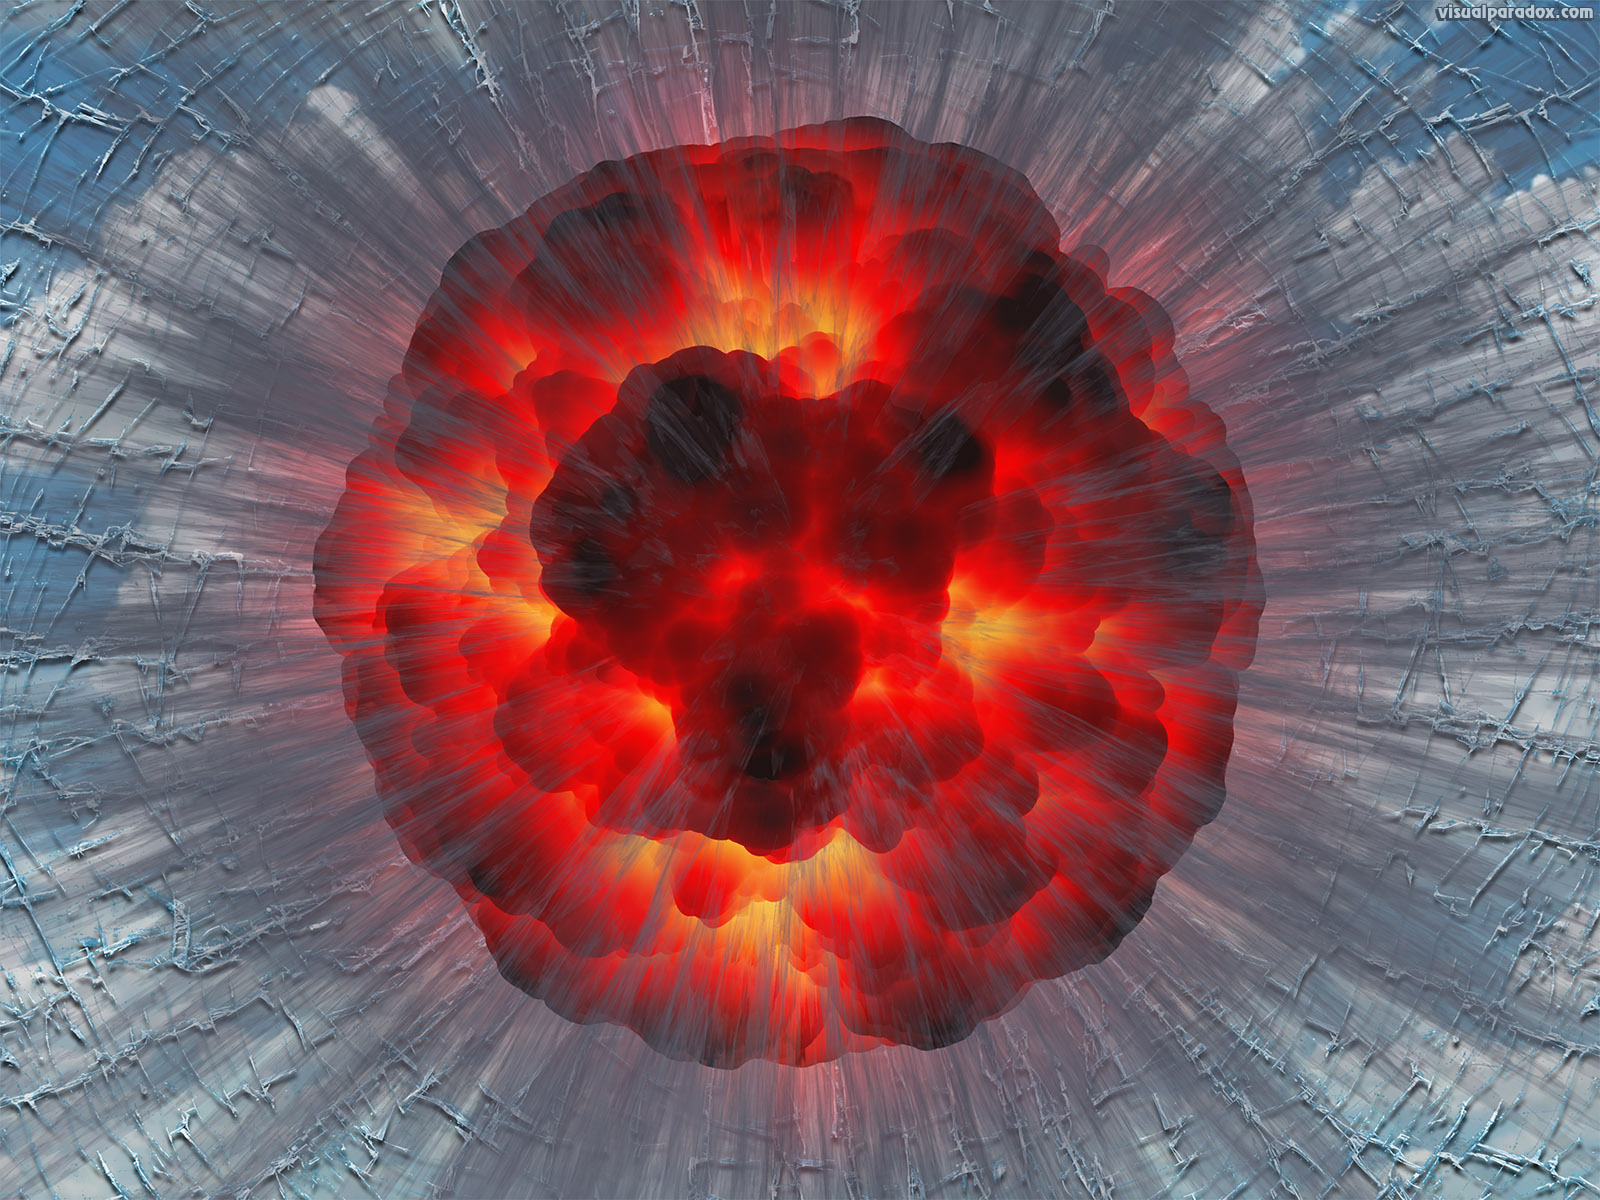 Explosion Big Bang Detonate Shatter Broken Glass Boom Blast